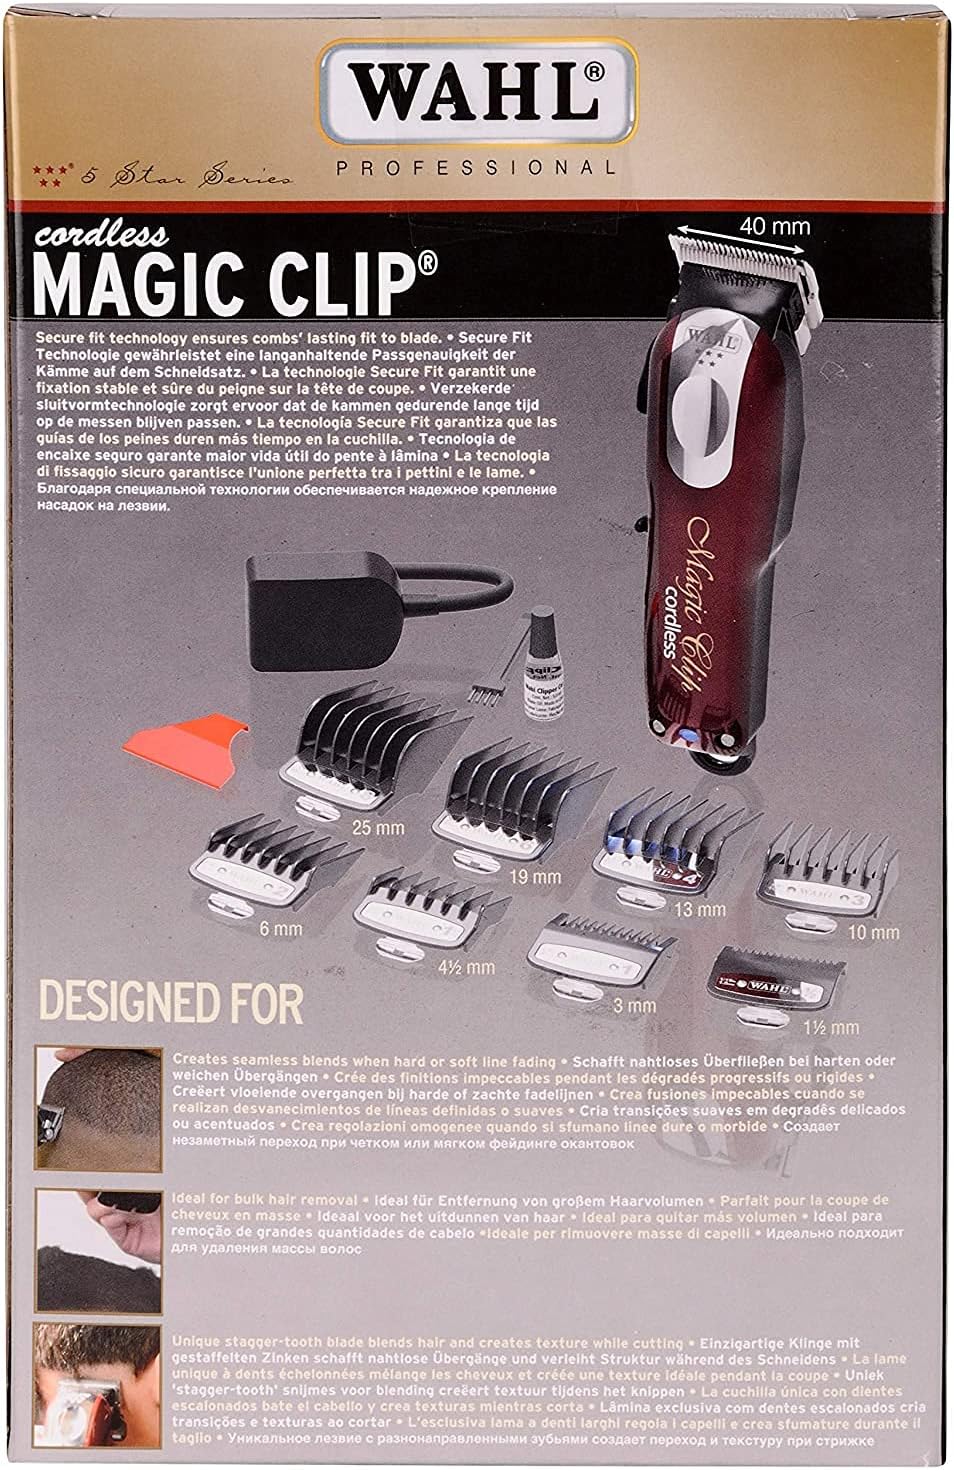 Máquina Corte de Cabelo - Magic Clip Cordless, Wahl, 08148-048, Vermelha